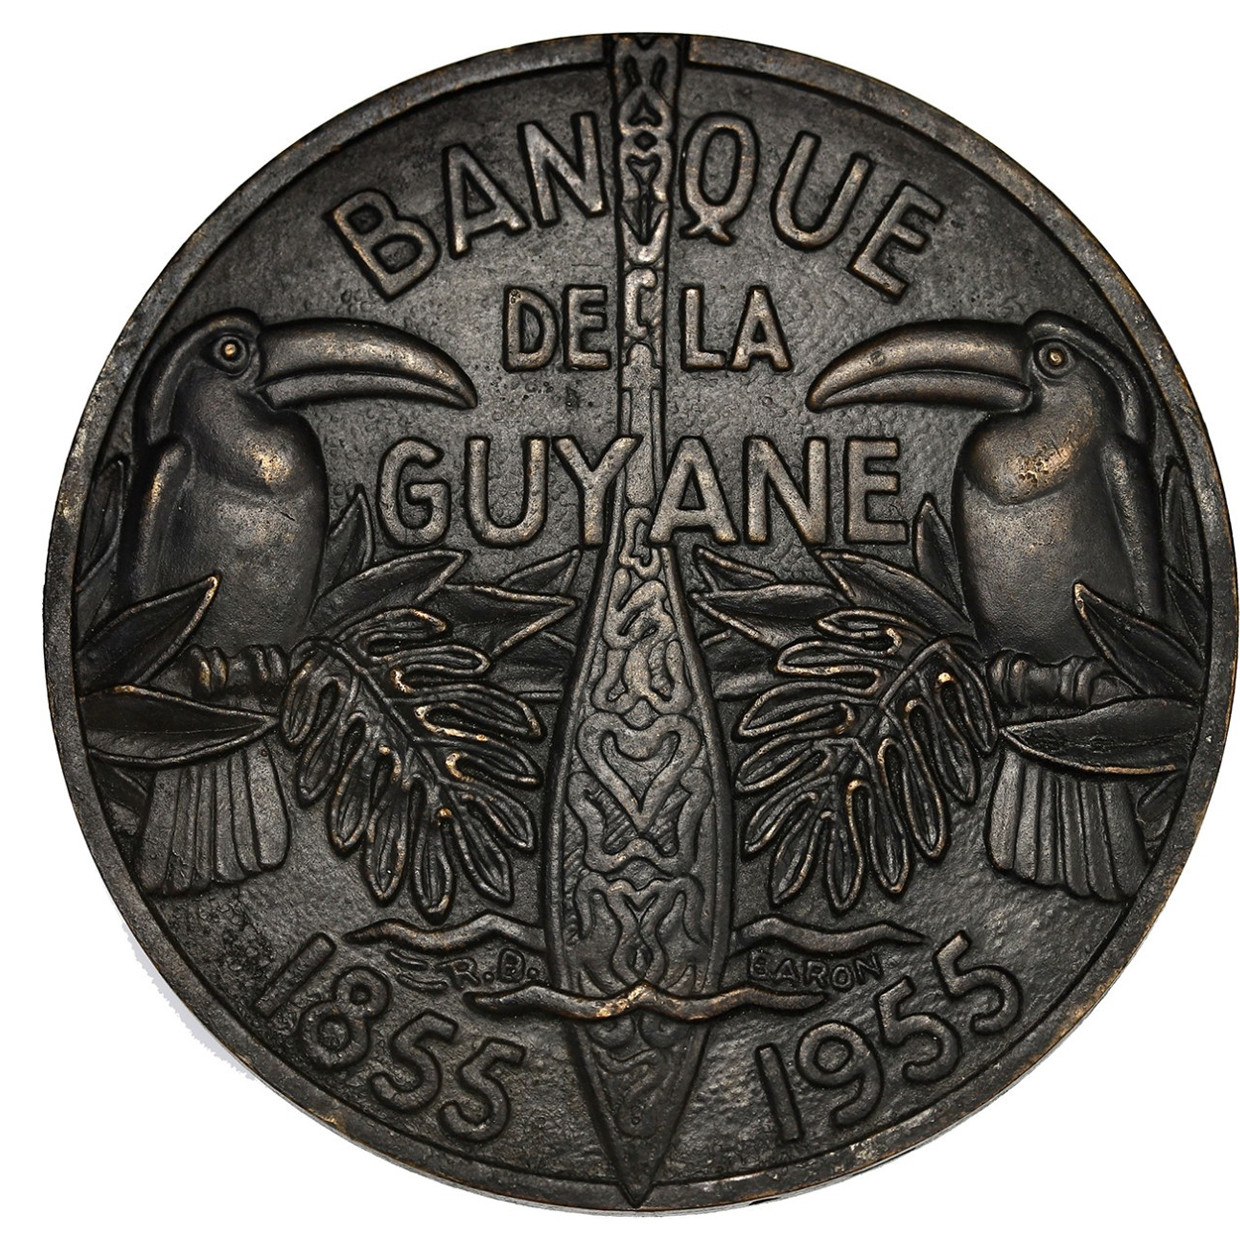 Guyane - Banque - Bronze - 1955 avers